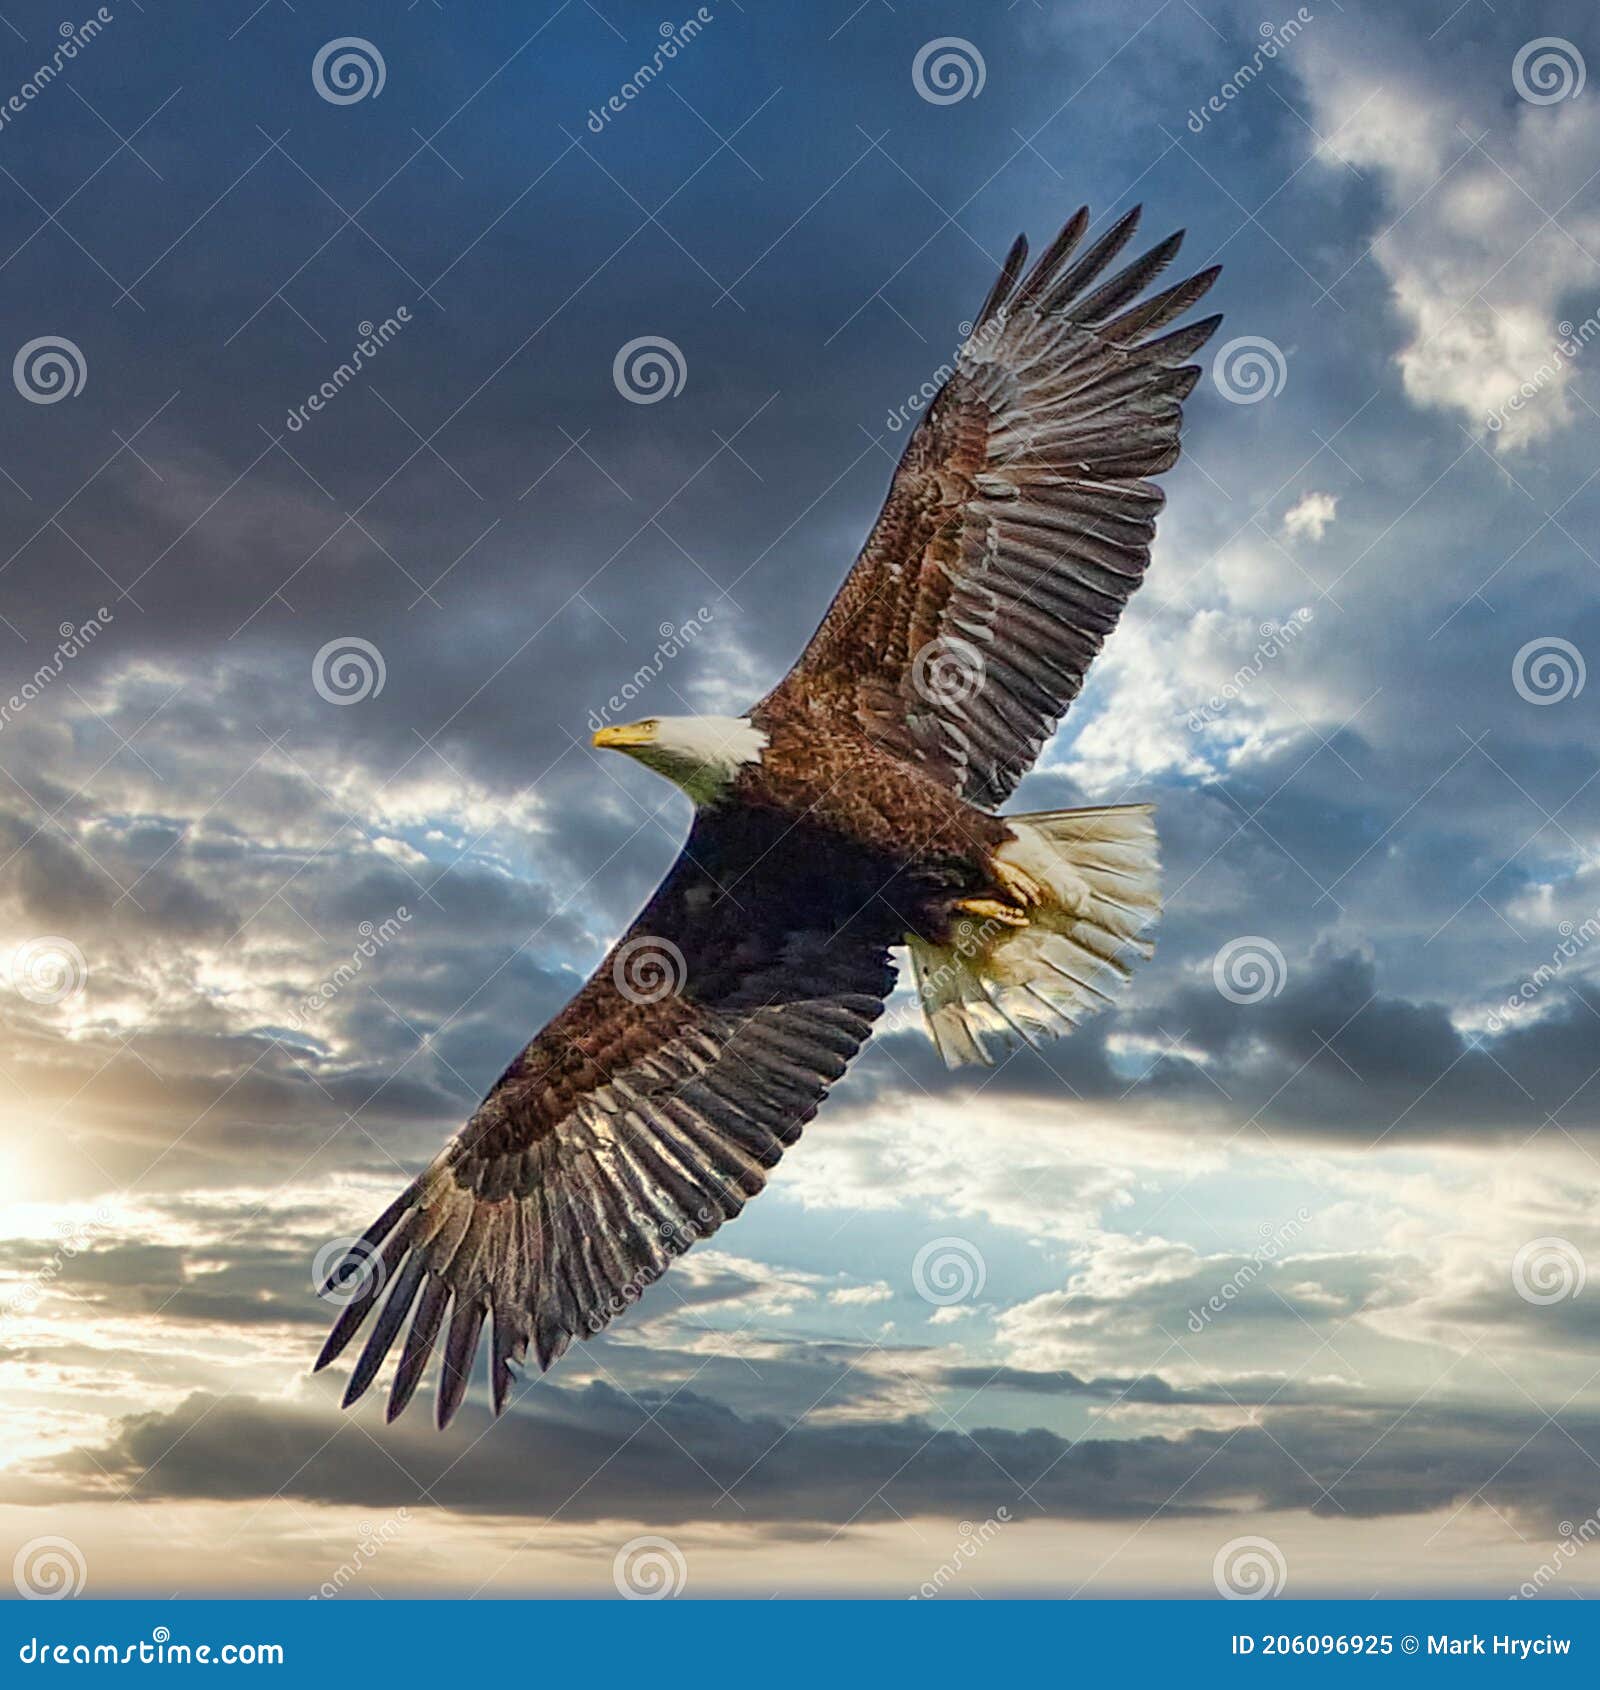 american bald eagle soaring high sunset sky background